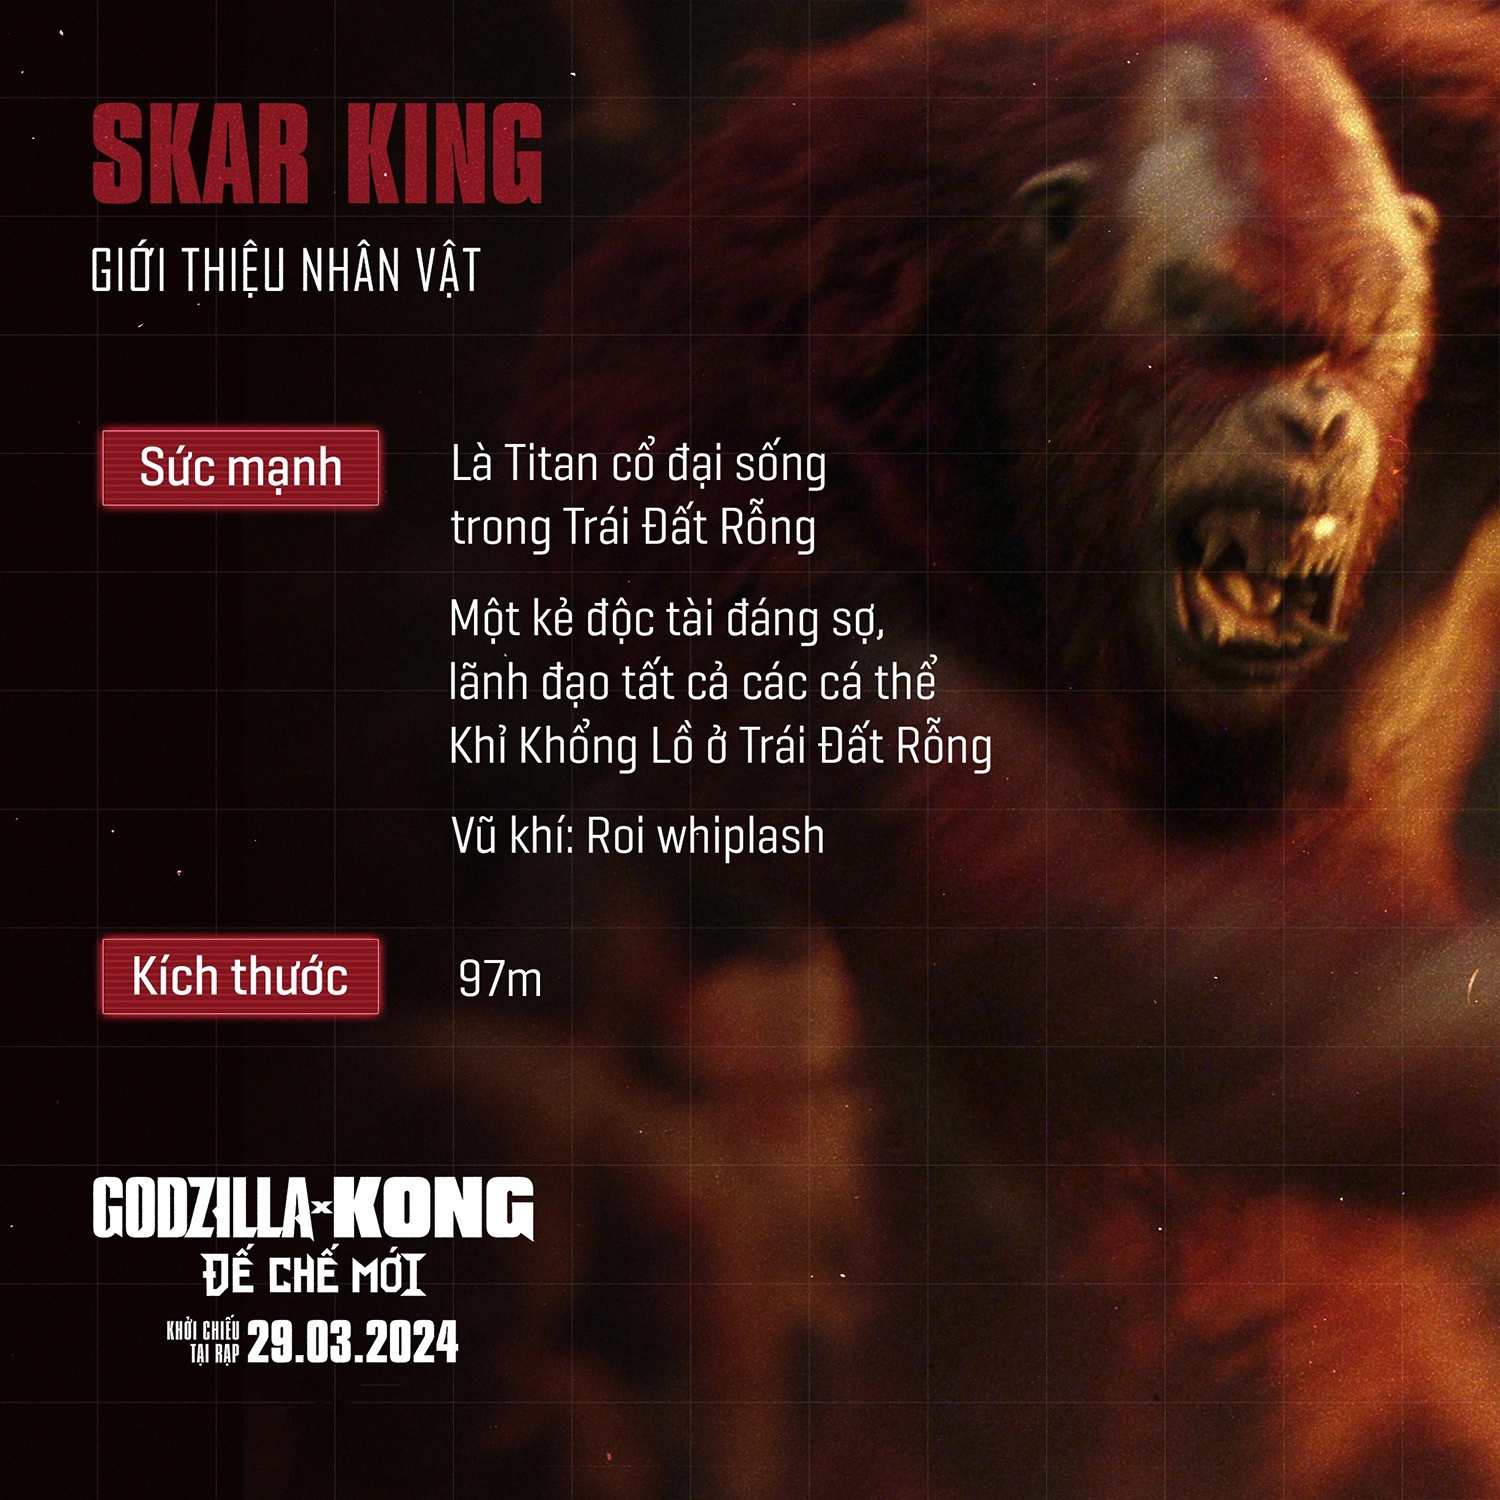 review-phim-godzilla-x-kong-de-che-moi-skar-king